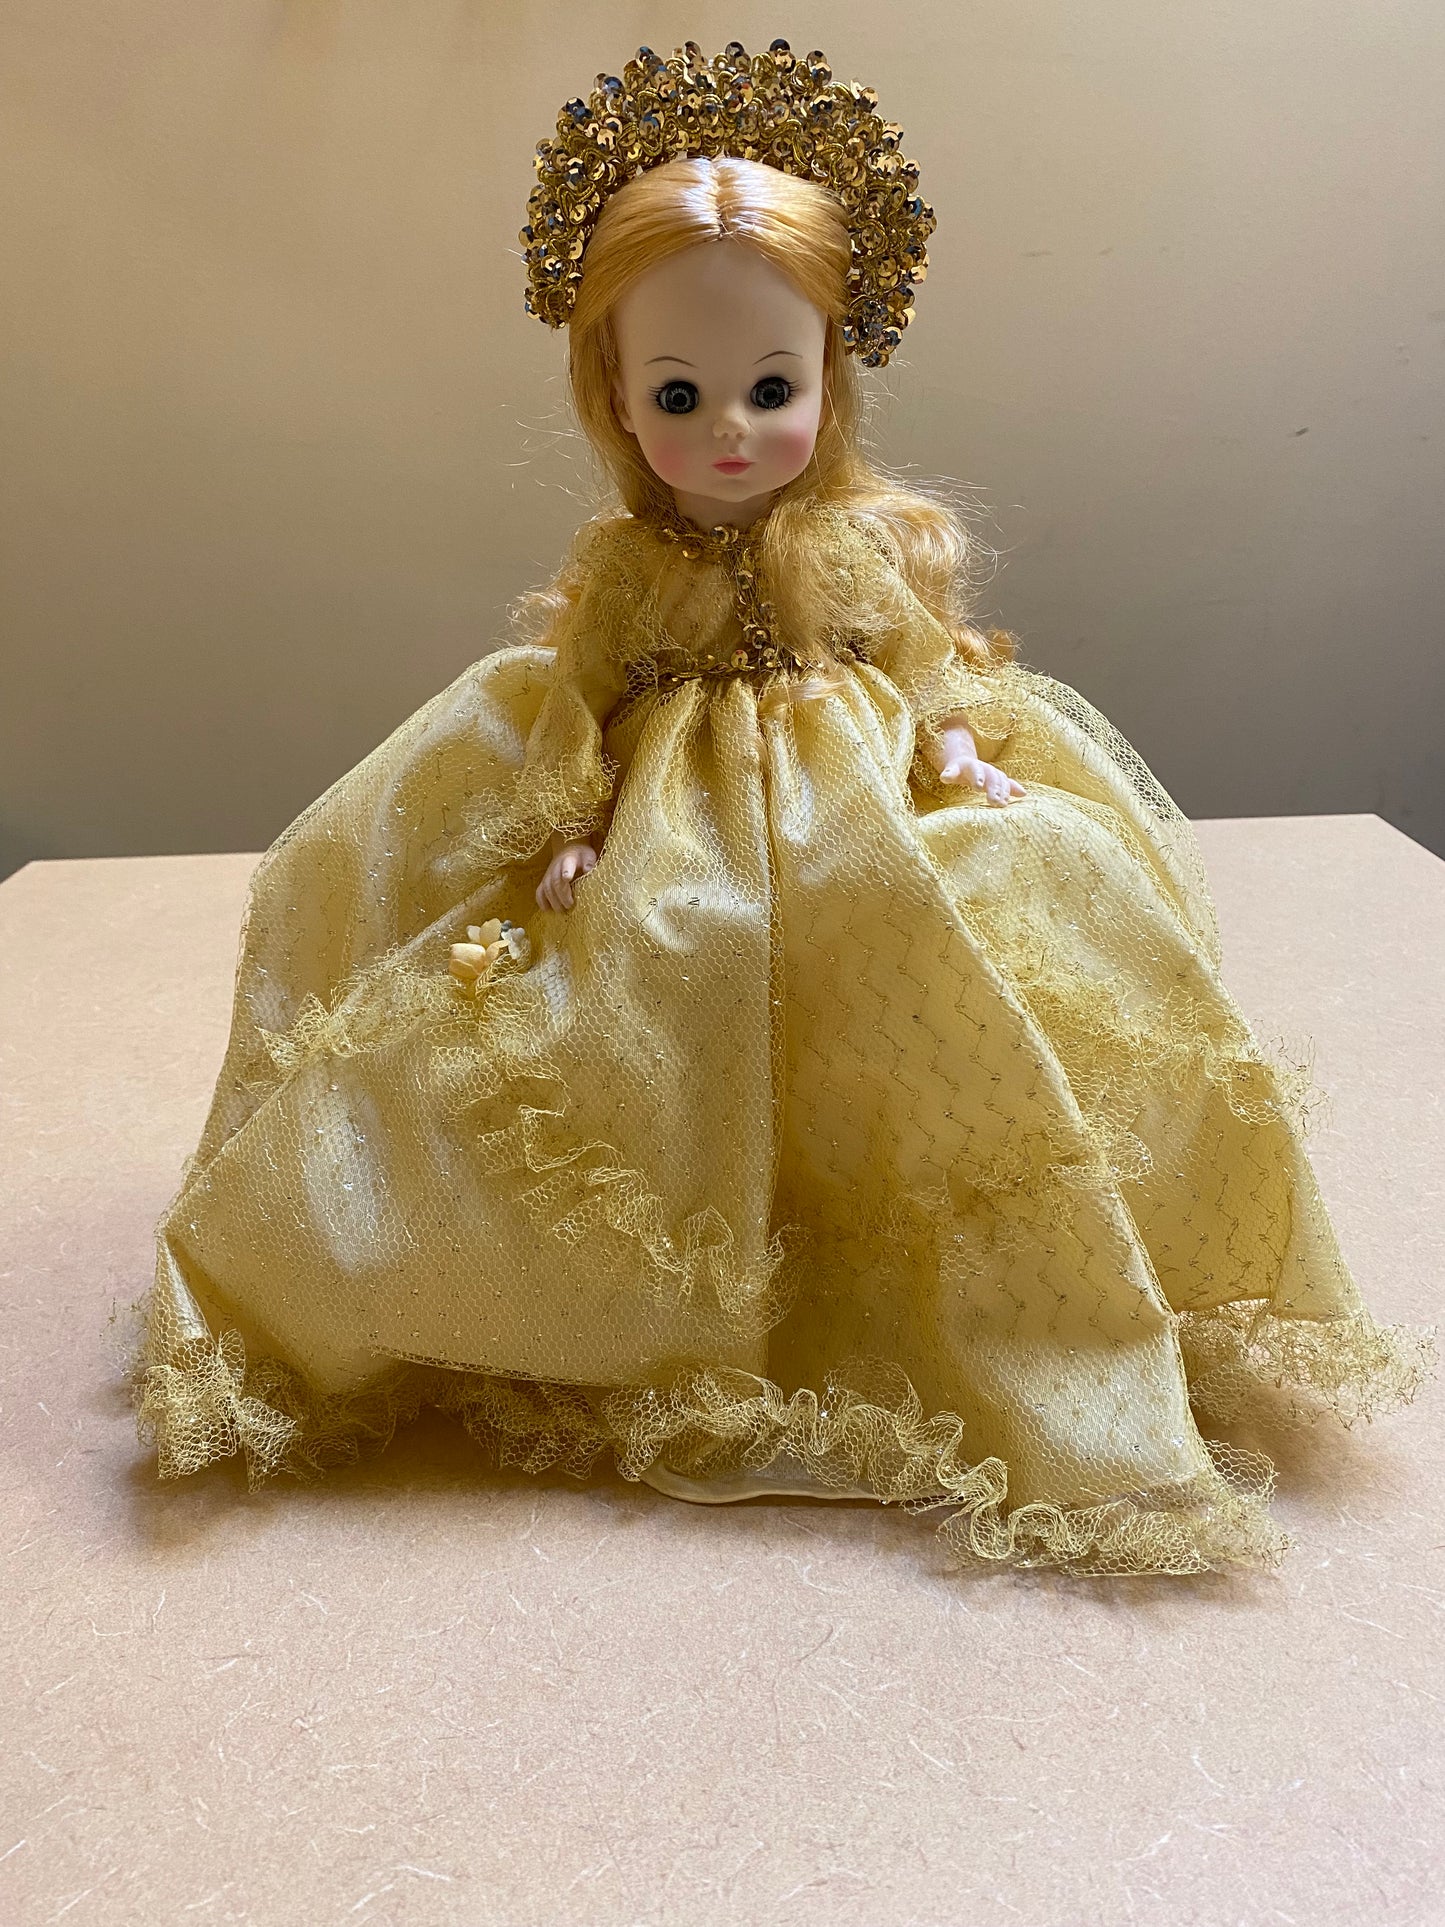 Madame Alexander's "Sleeping Beauty" Doll